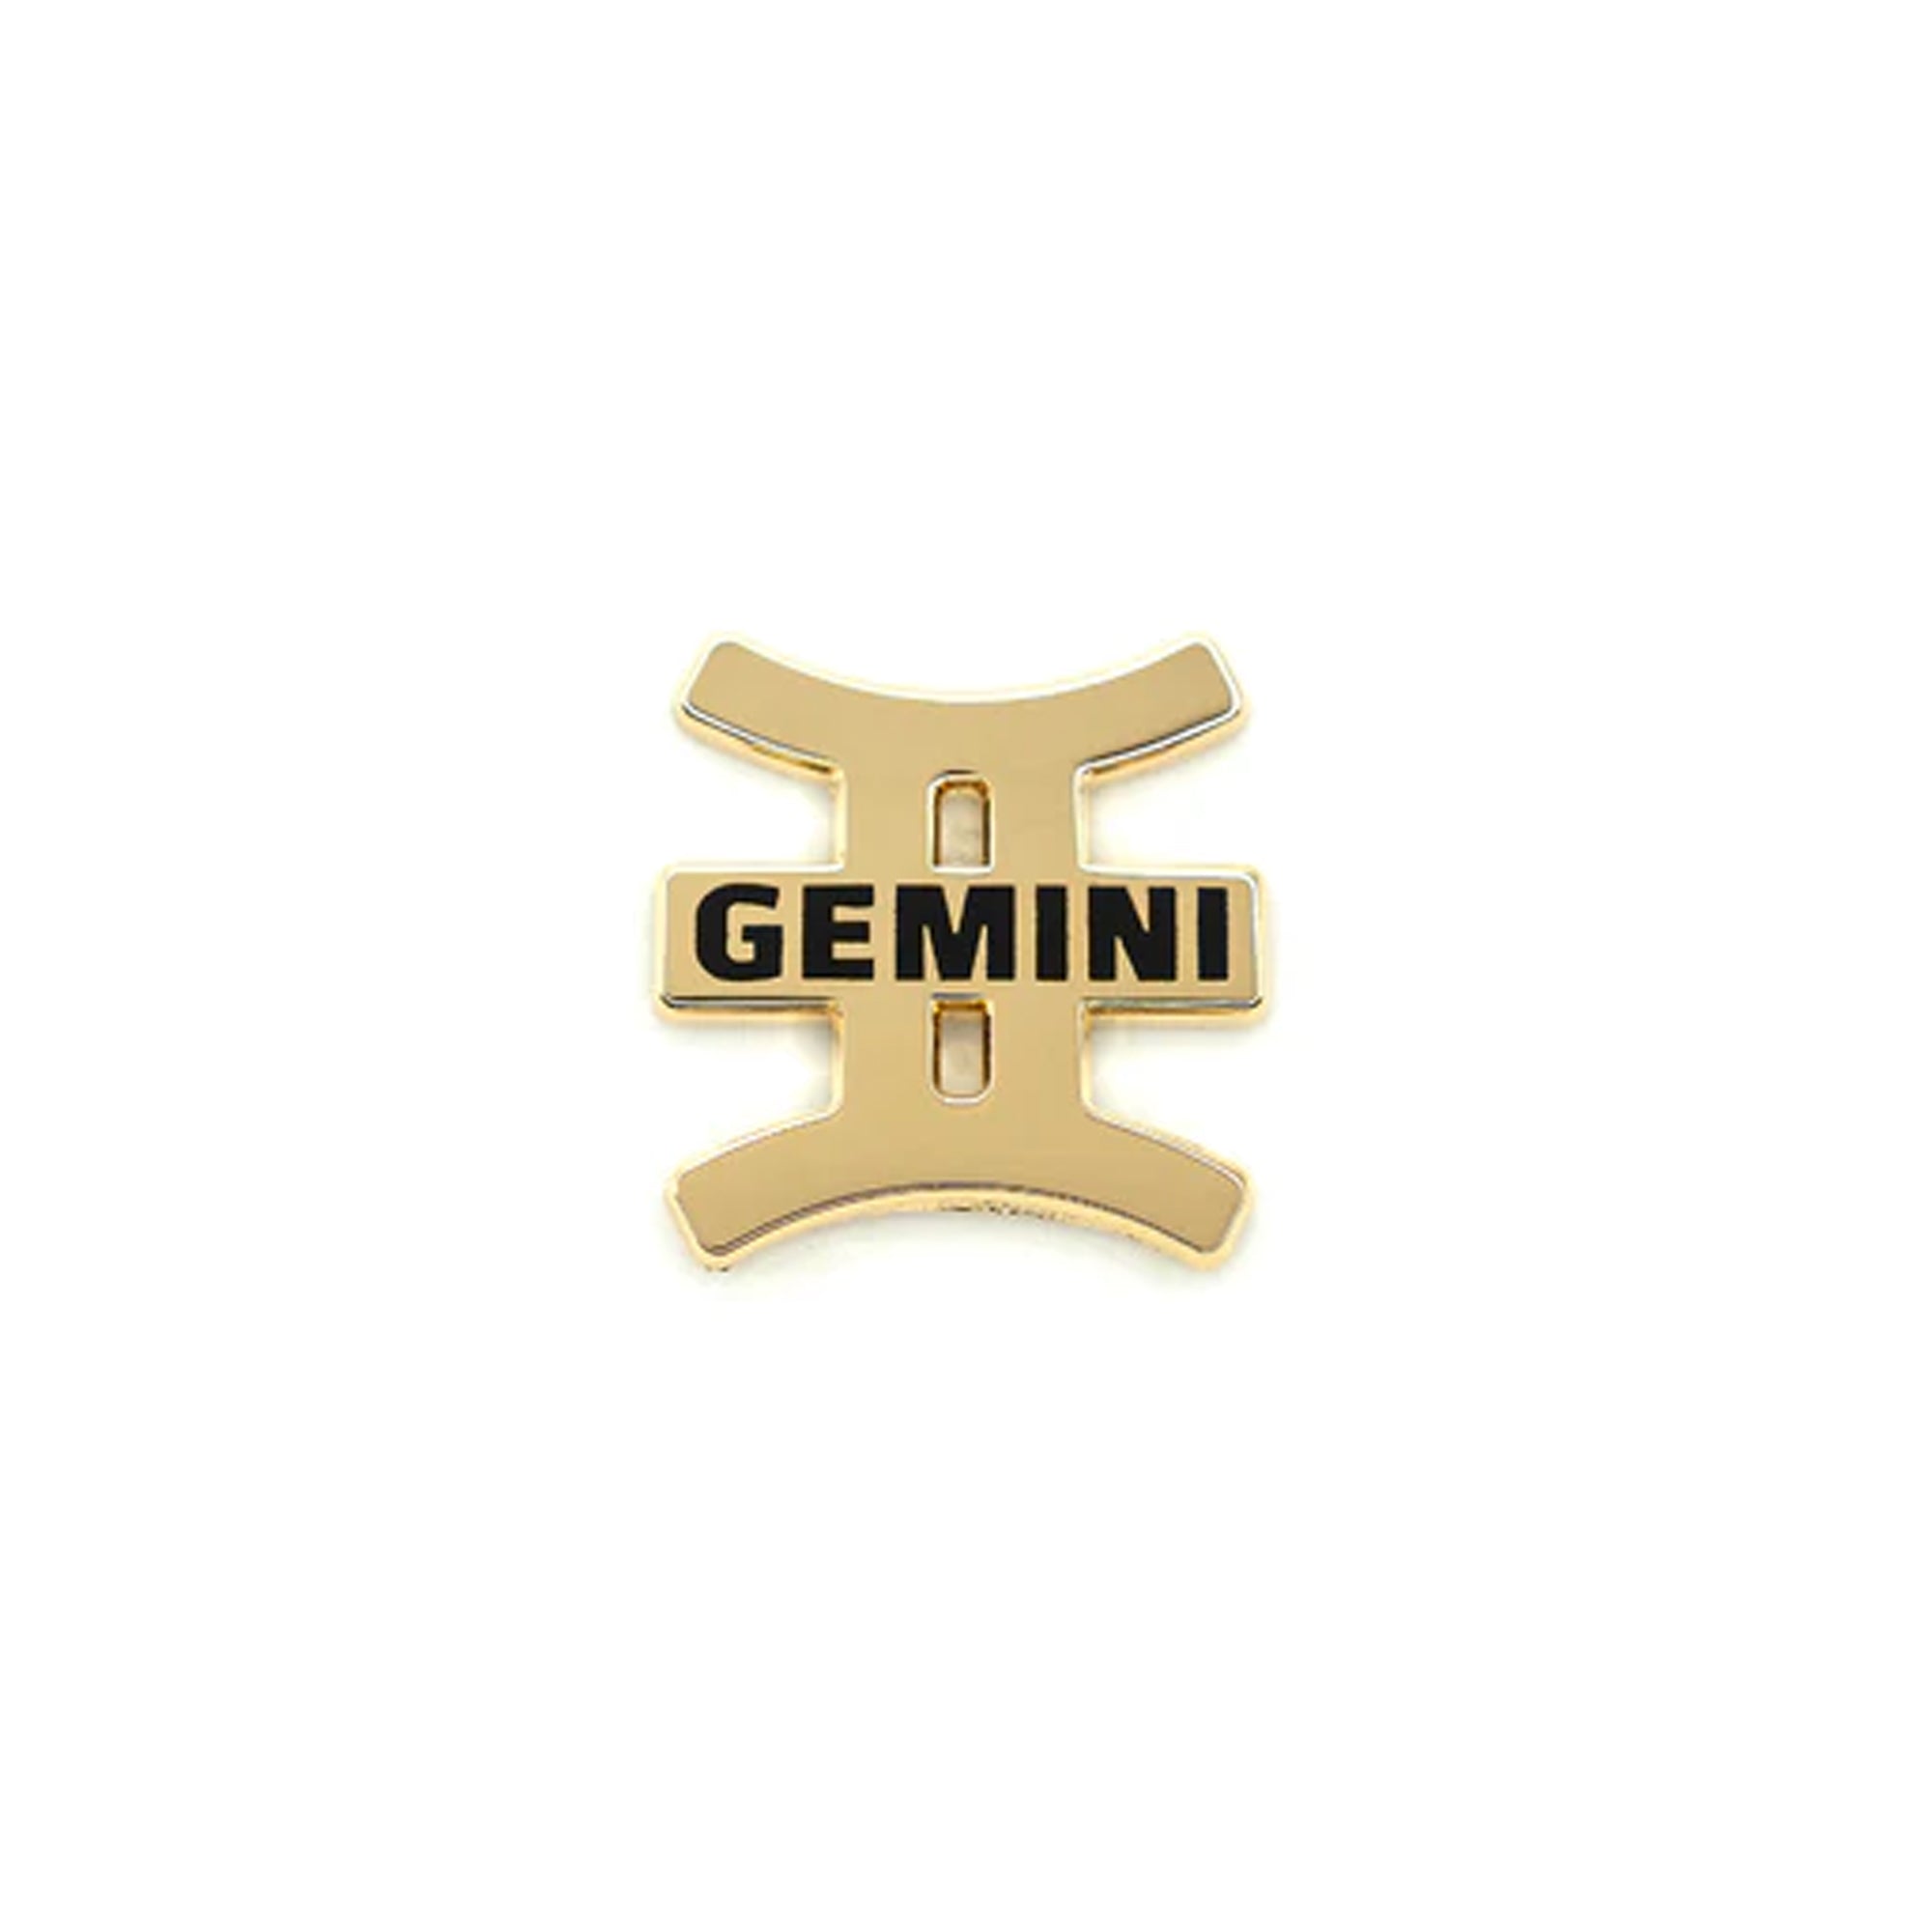 Hdqtrs Gemini Pin